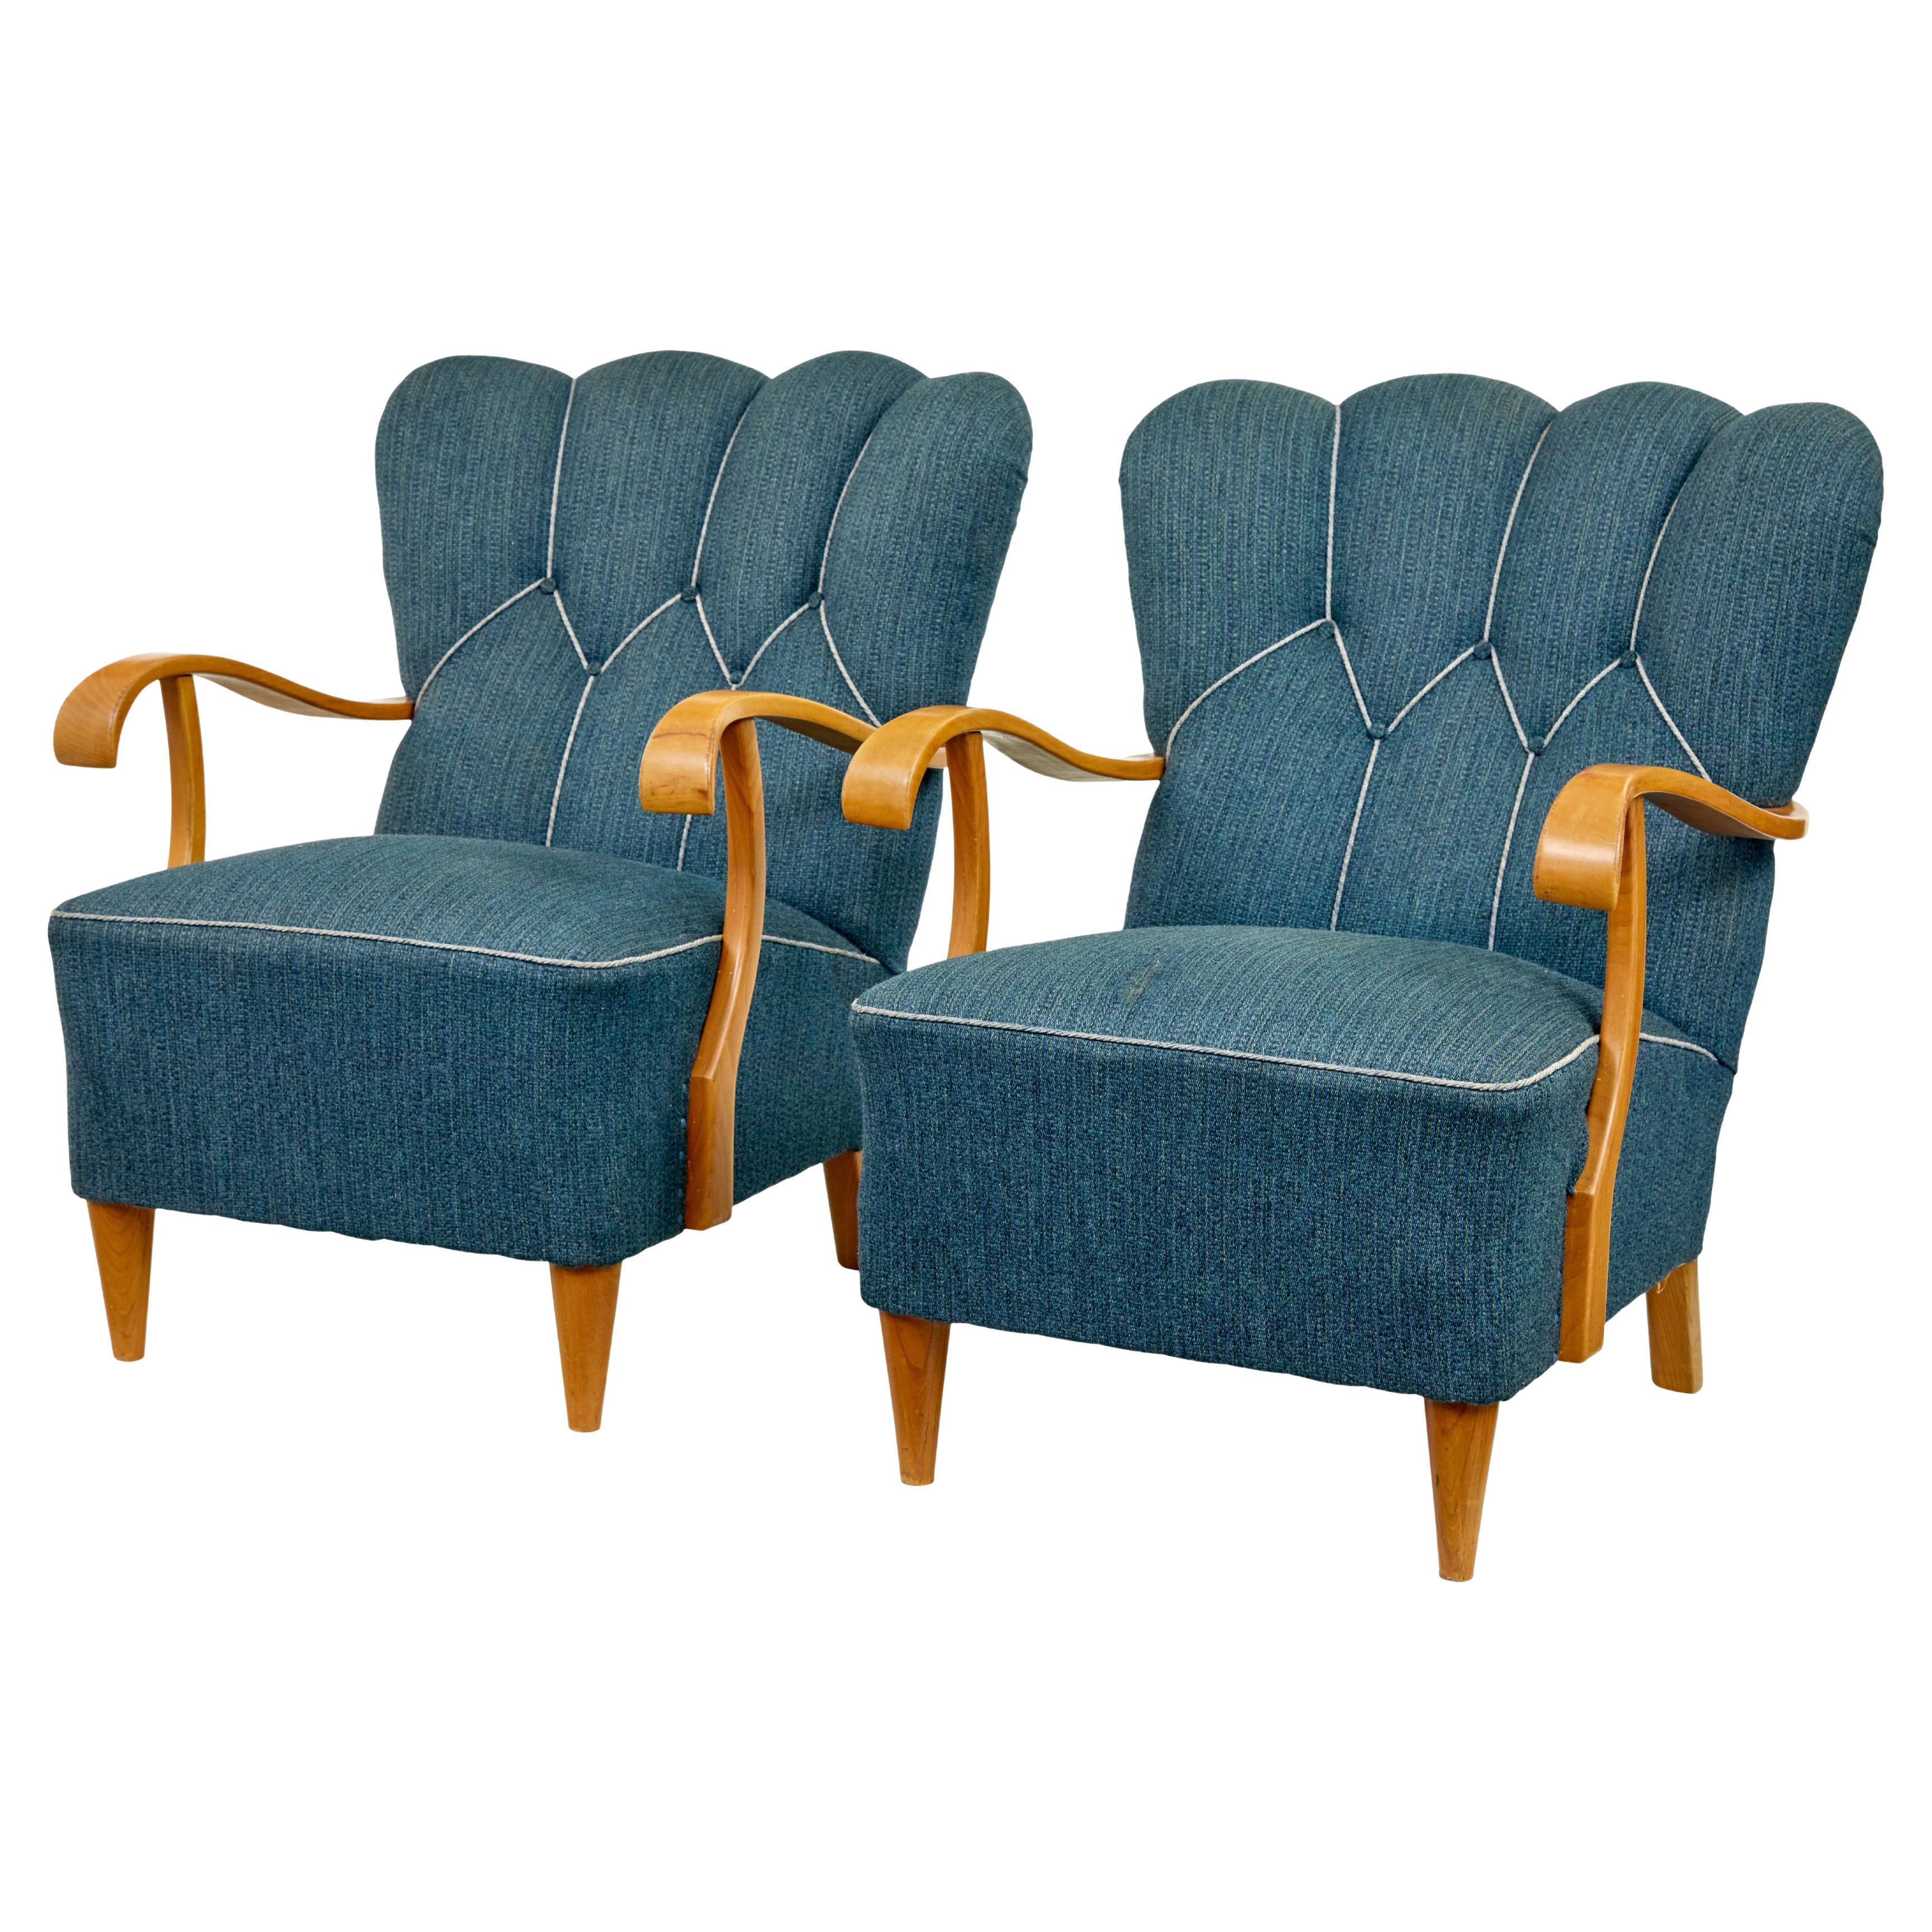 Pair of Scandinavian 1950’s shell back armchairs